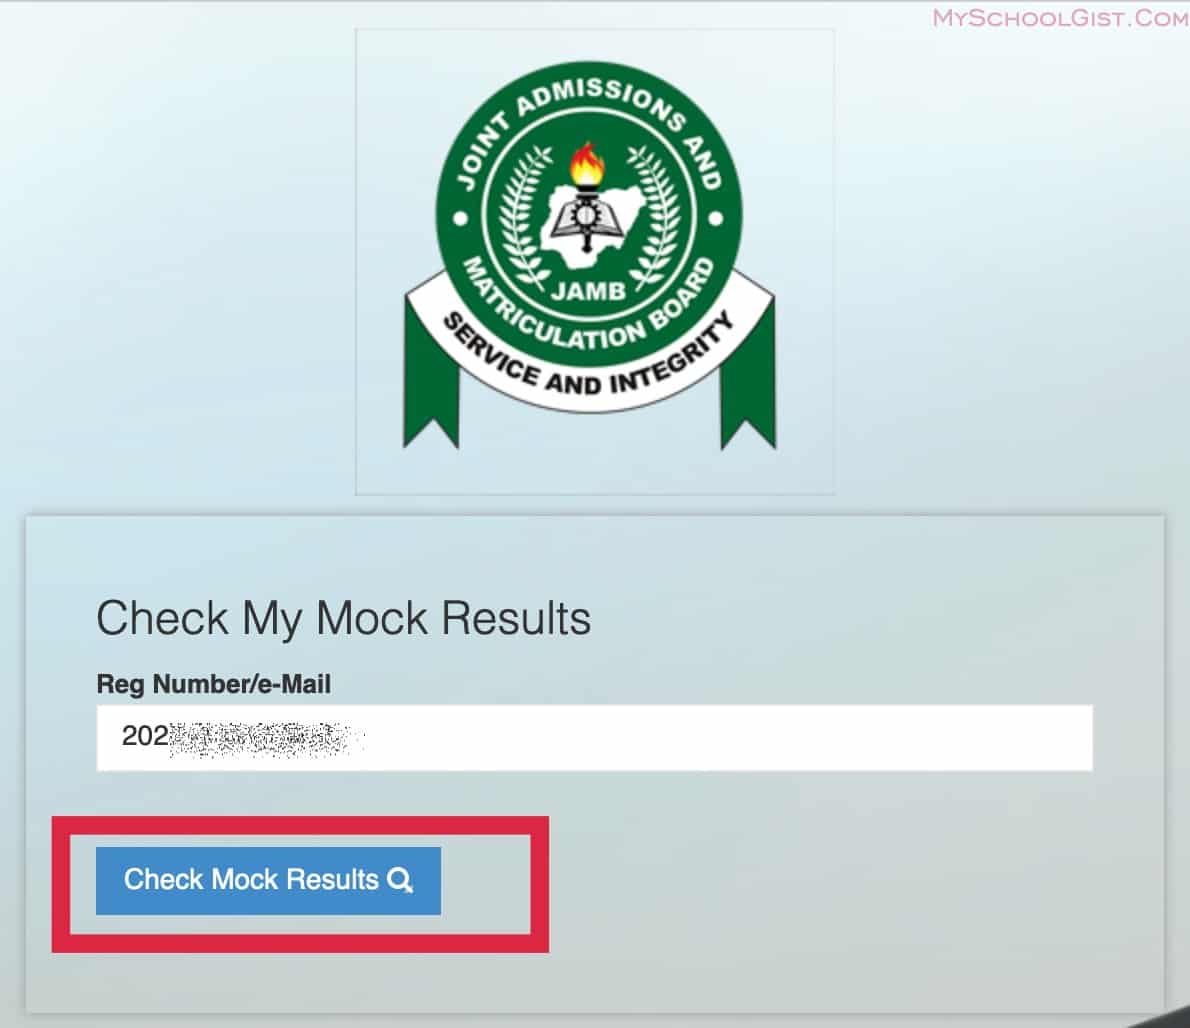 Press the Check Mock Results button